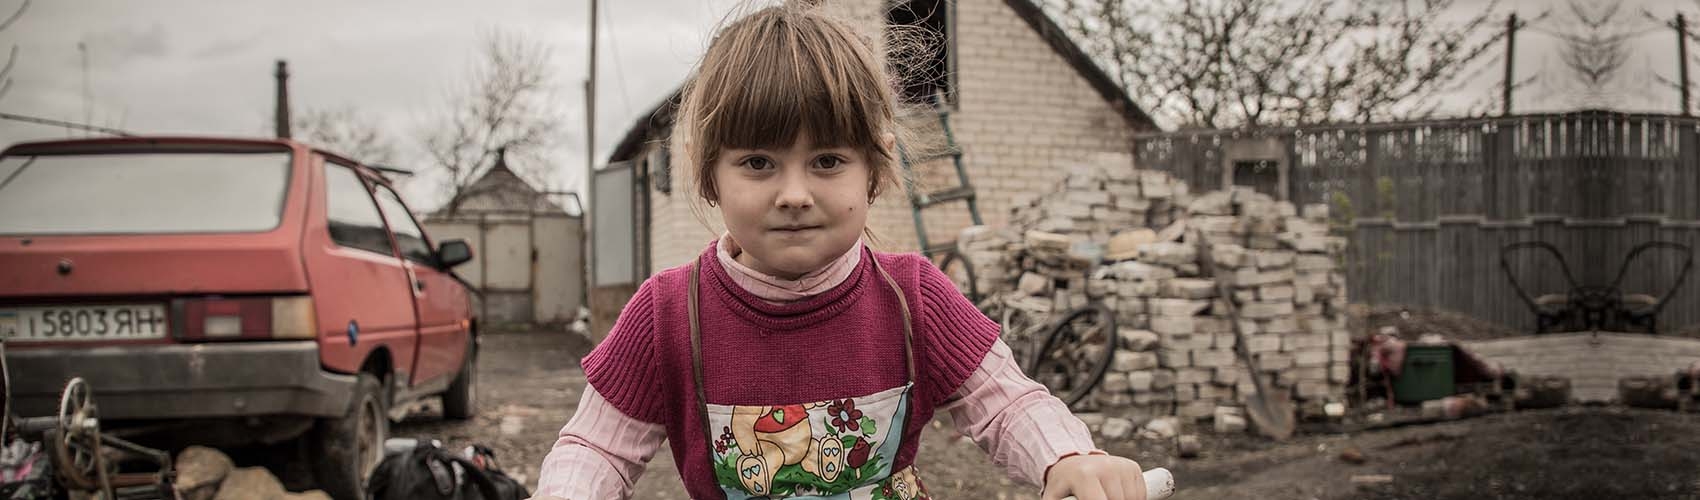 In Ukraine, a girl rides a bike near a crumbled wall and dirt path.